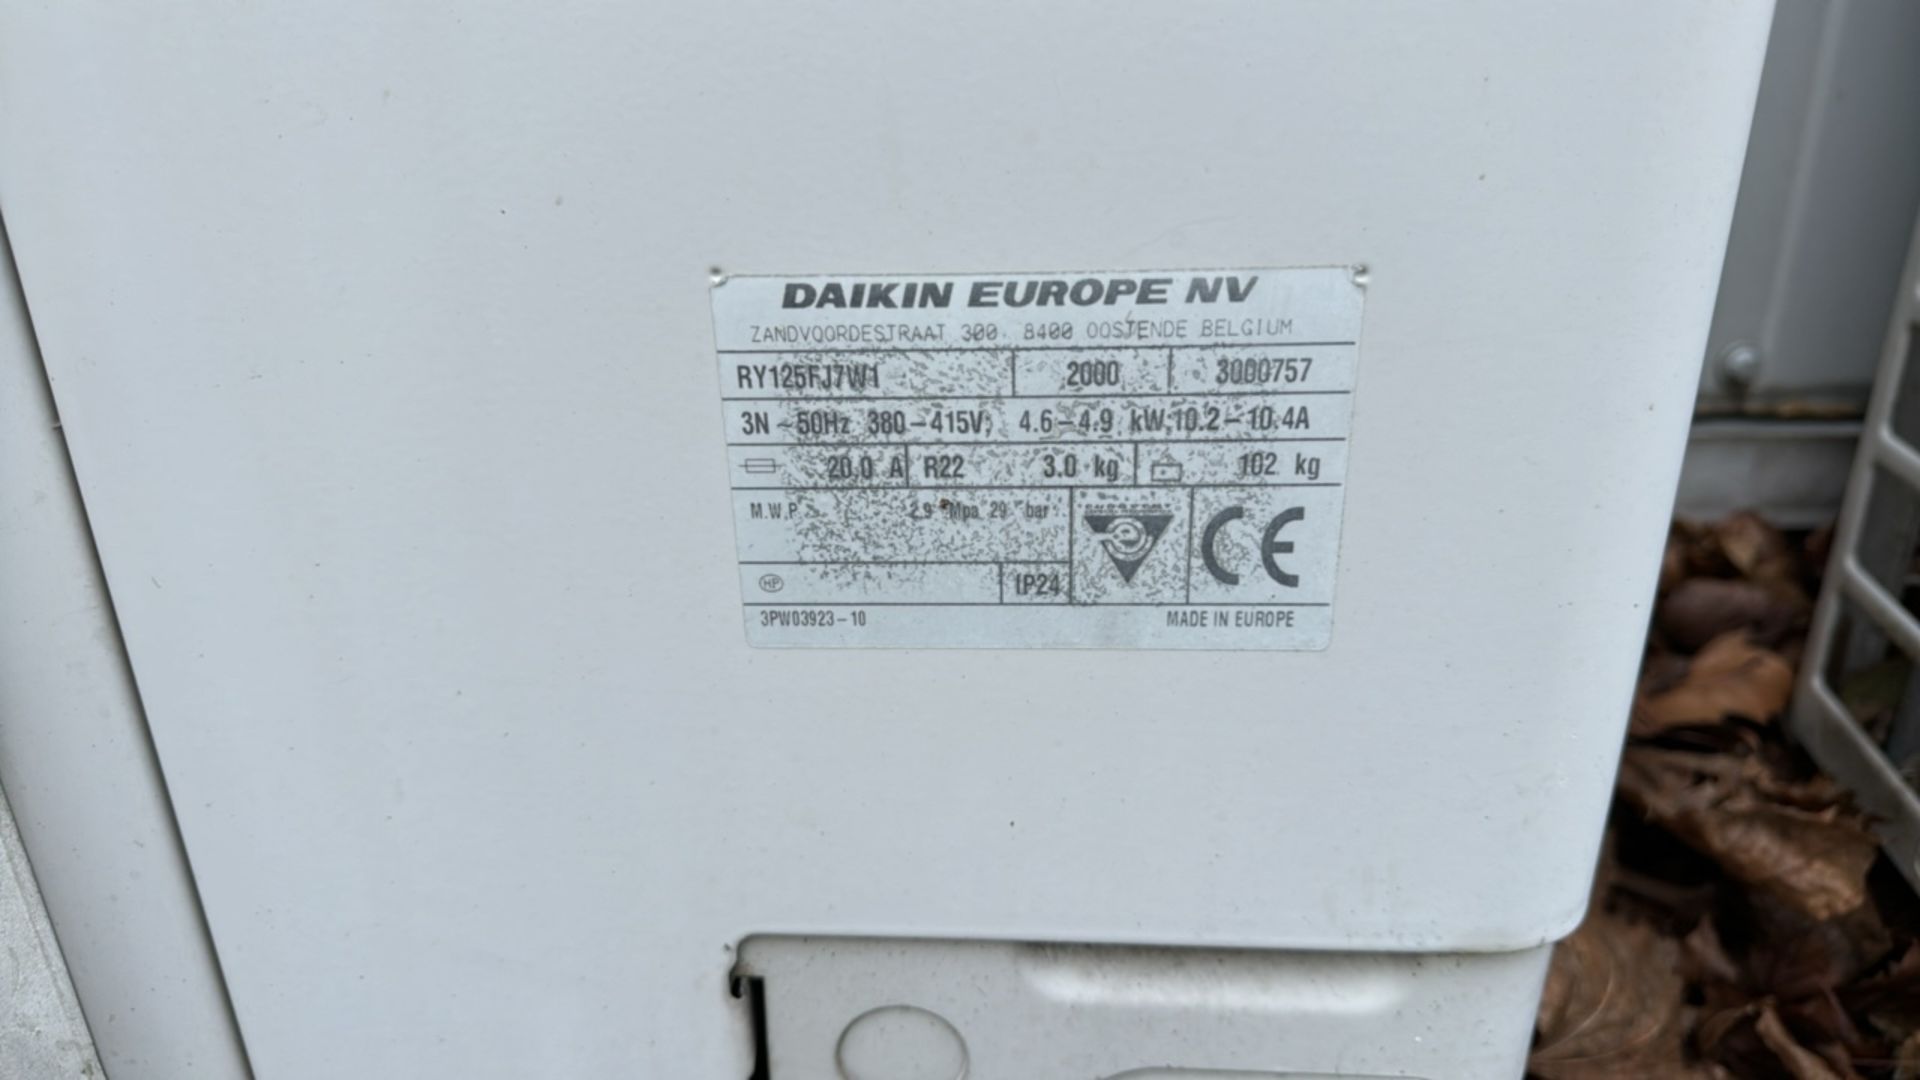 Daikin Air Conditoner - Image 3 of 3